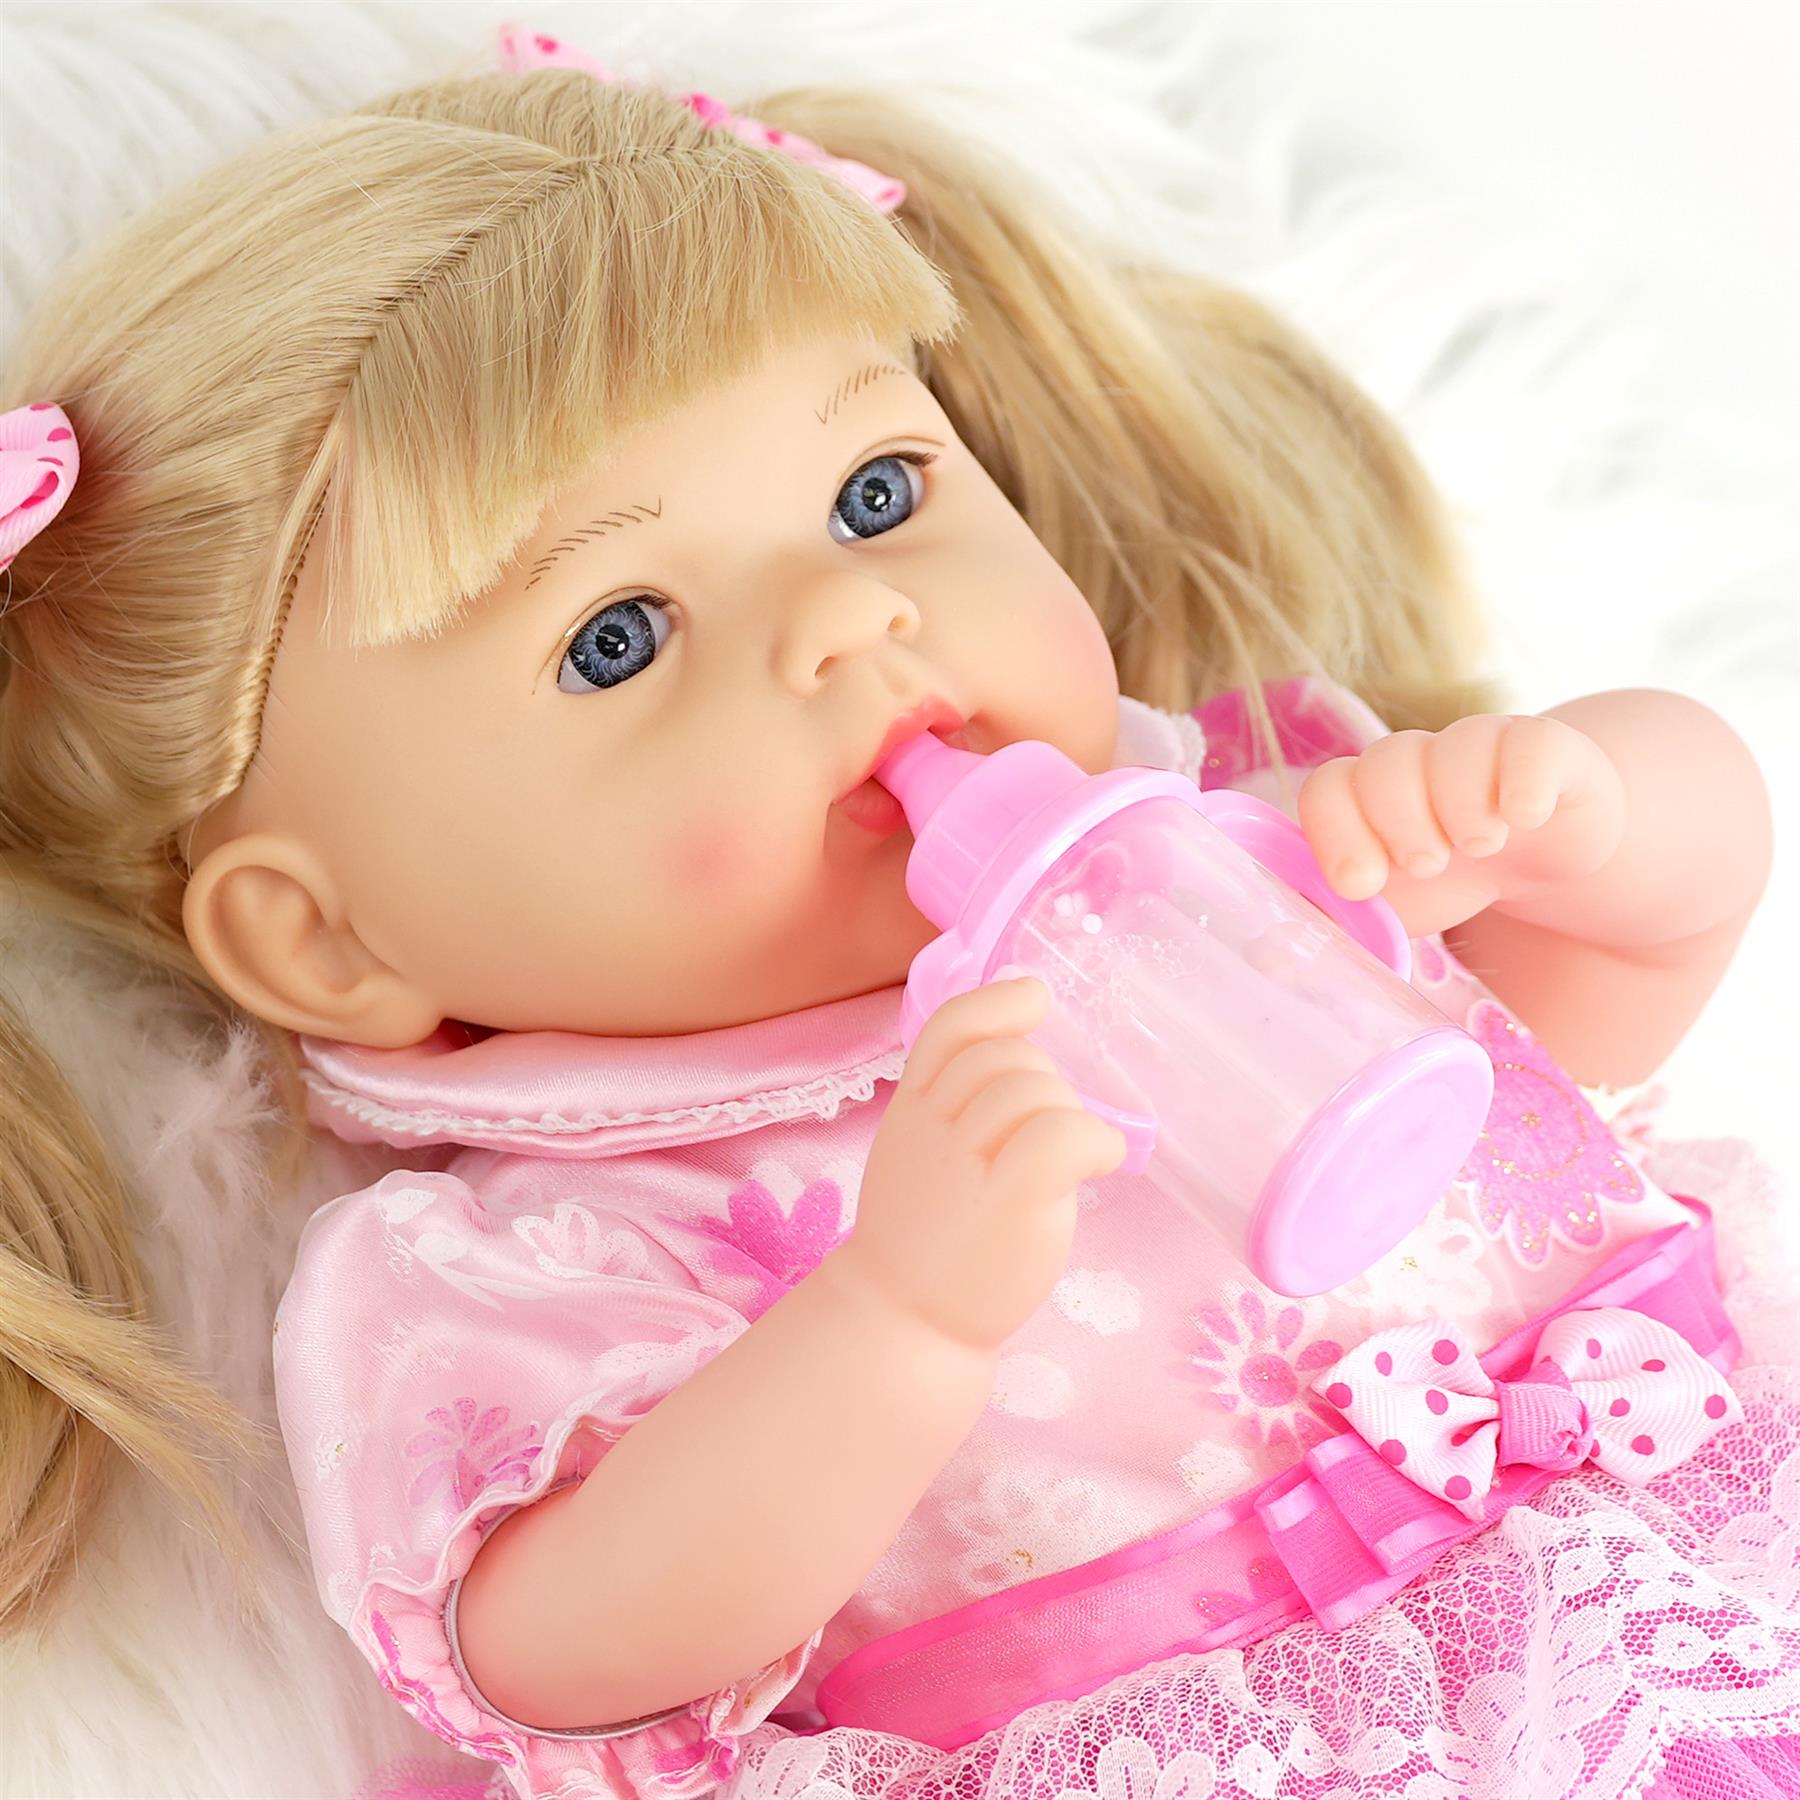 BiBi Doll Milk Bottle Set for Baby Dolls by BiBi Doll - The Magic Toy Shop